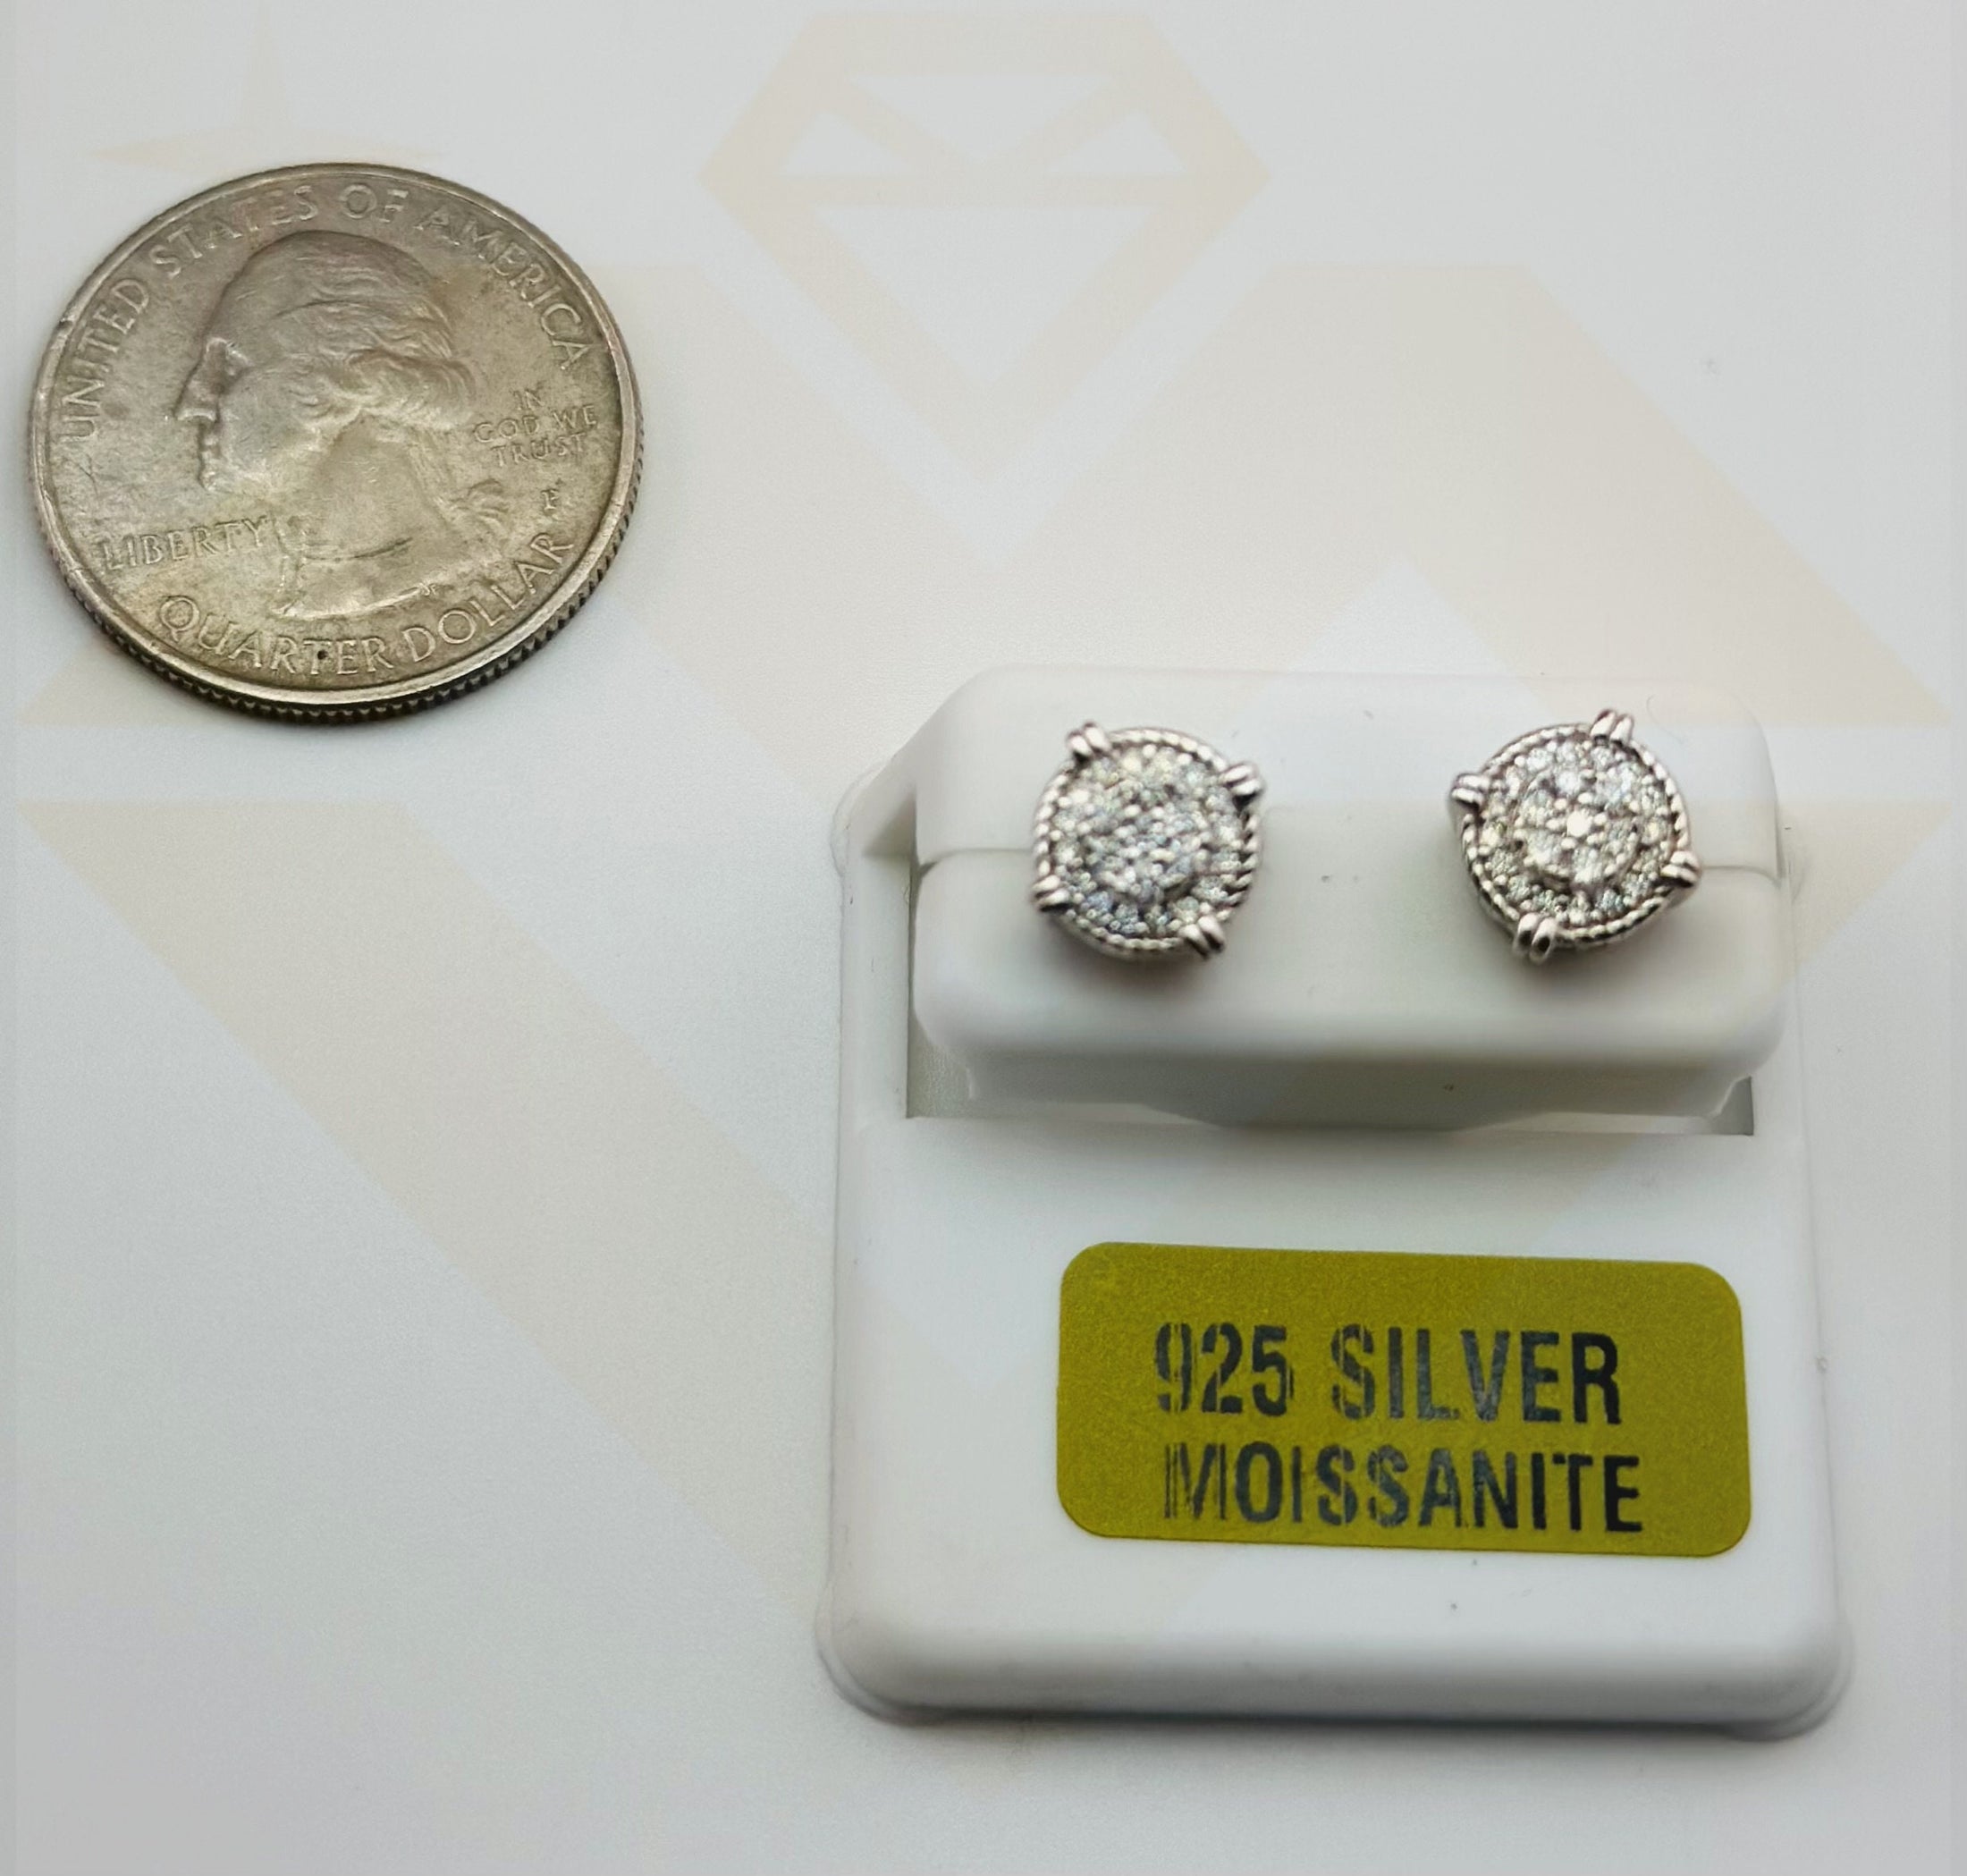 Iced out VVS Gra certified Moissanite Diamond custom designed earrings, Screwback secured daily wear studs, 100% passes diamond testers, HOT